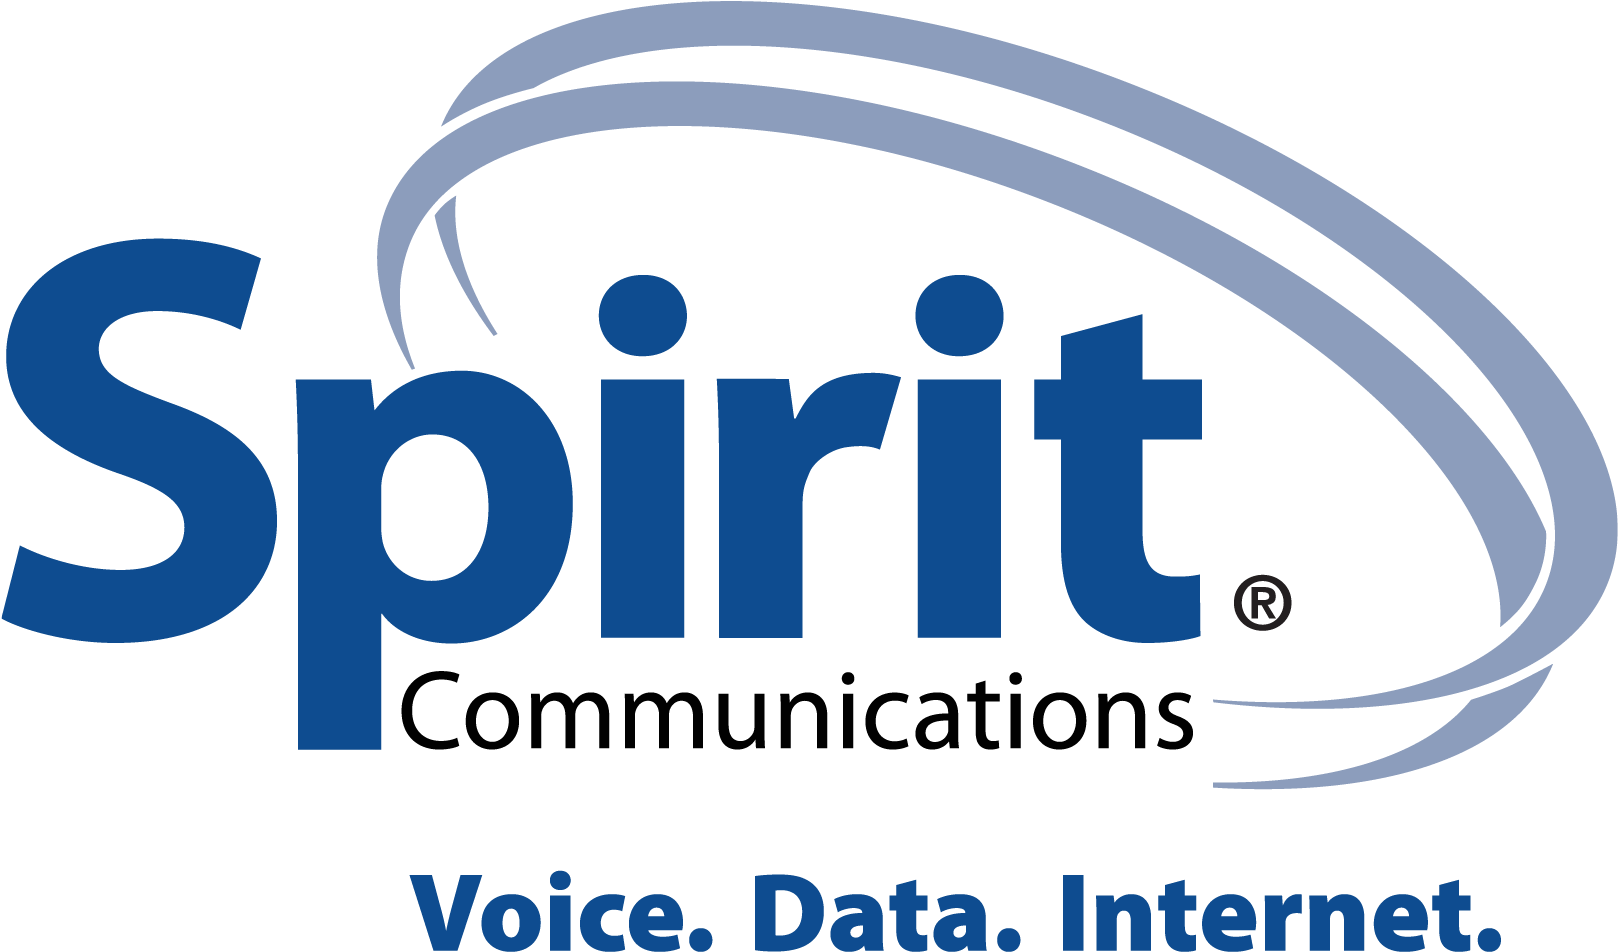 Spirit Communications